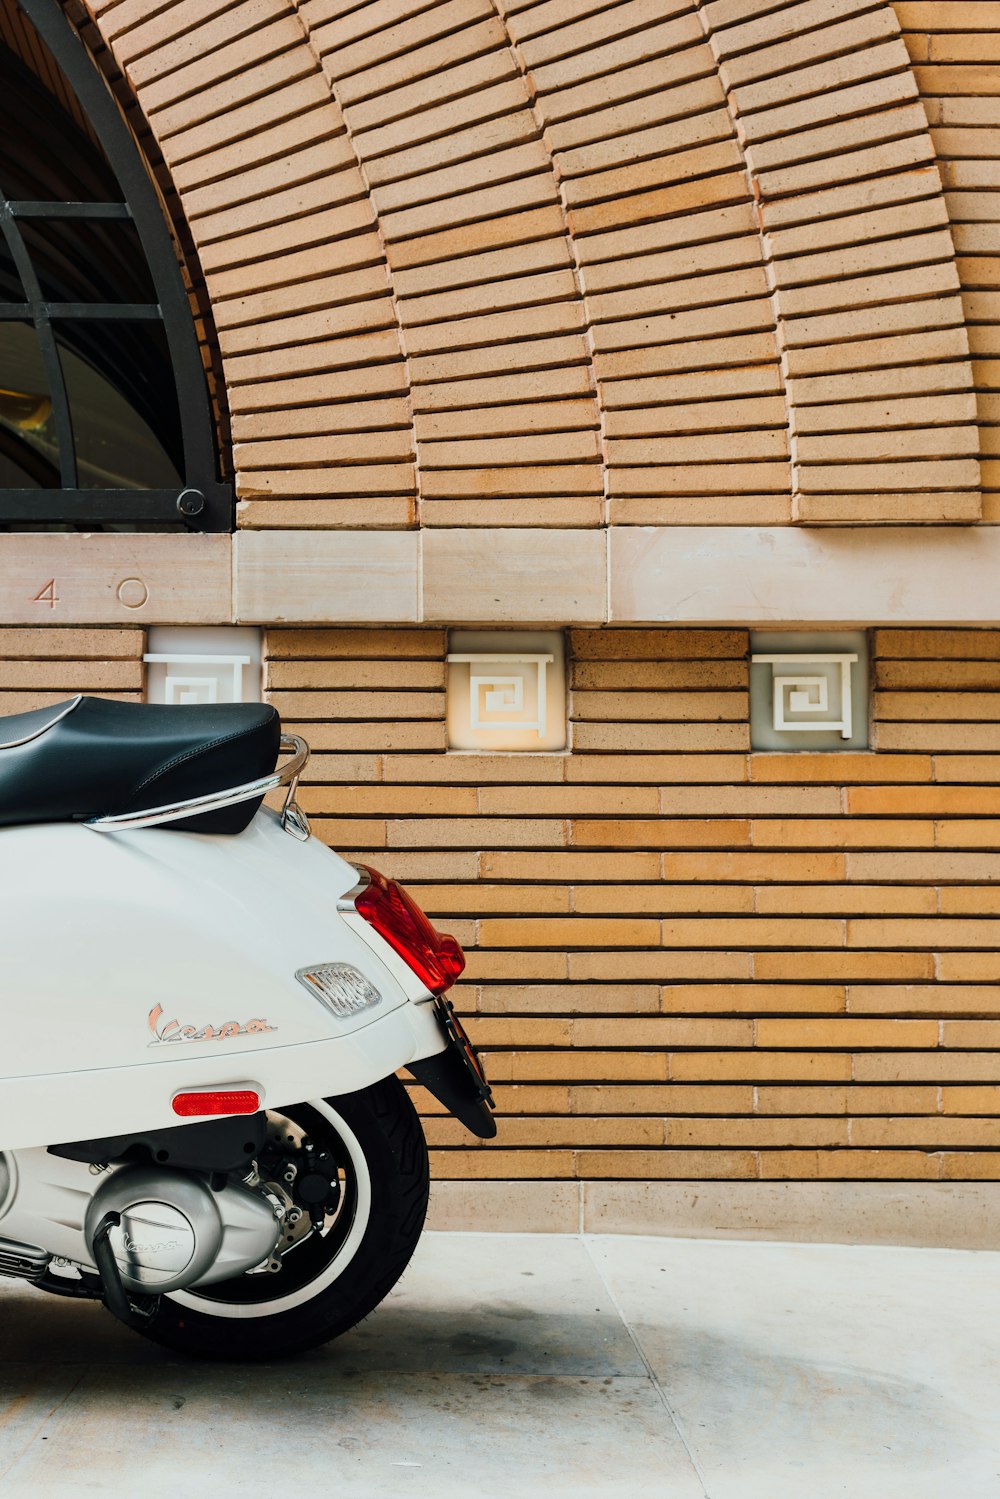 Motocicleta branca estacionada ao lado de parede marrom